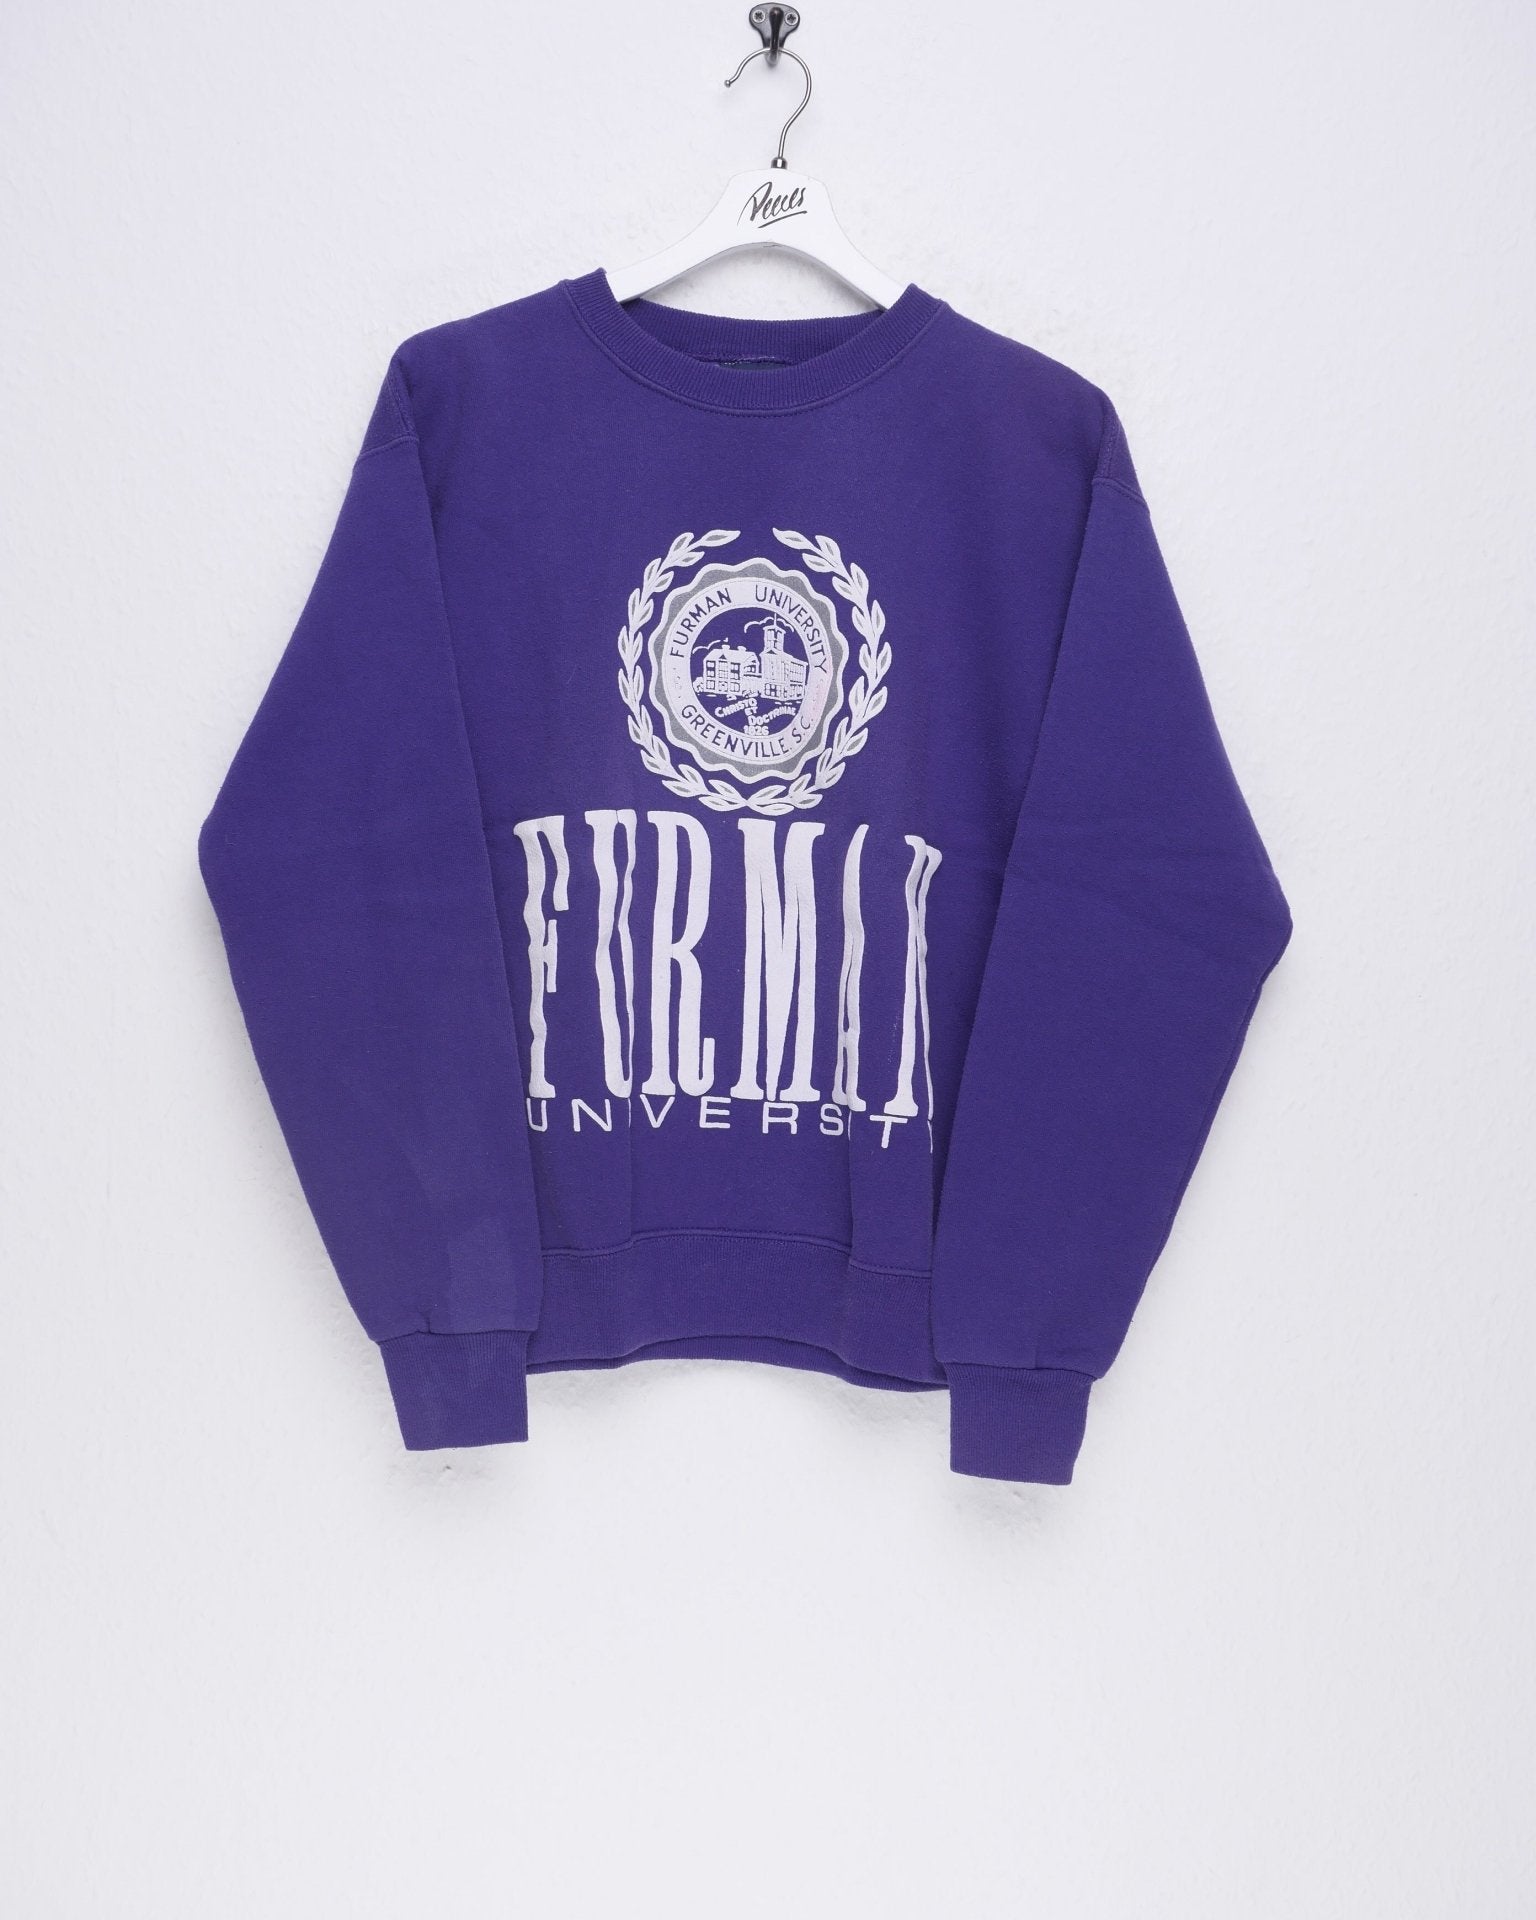 Furman University printed Graphic Vintage Sweater - Peeces